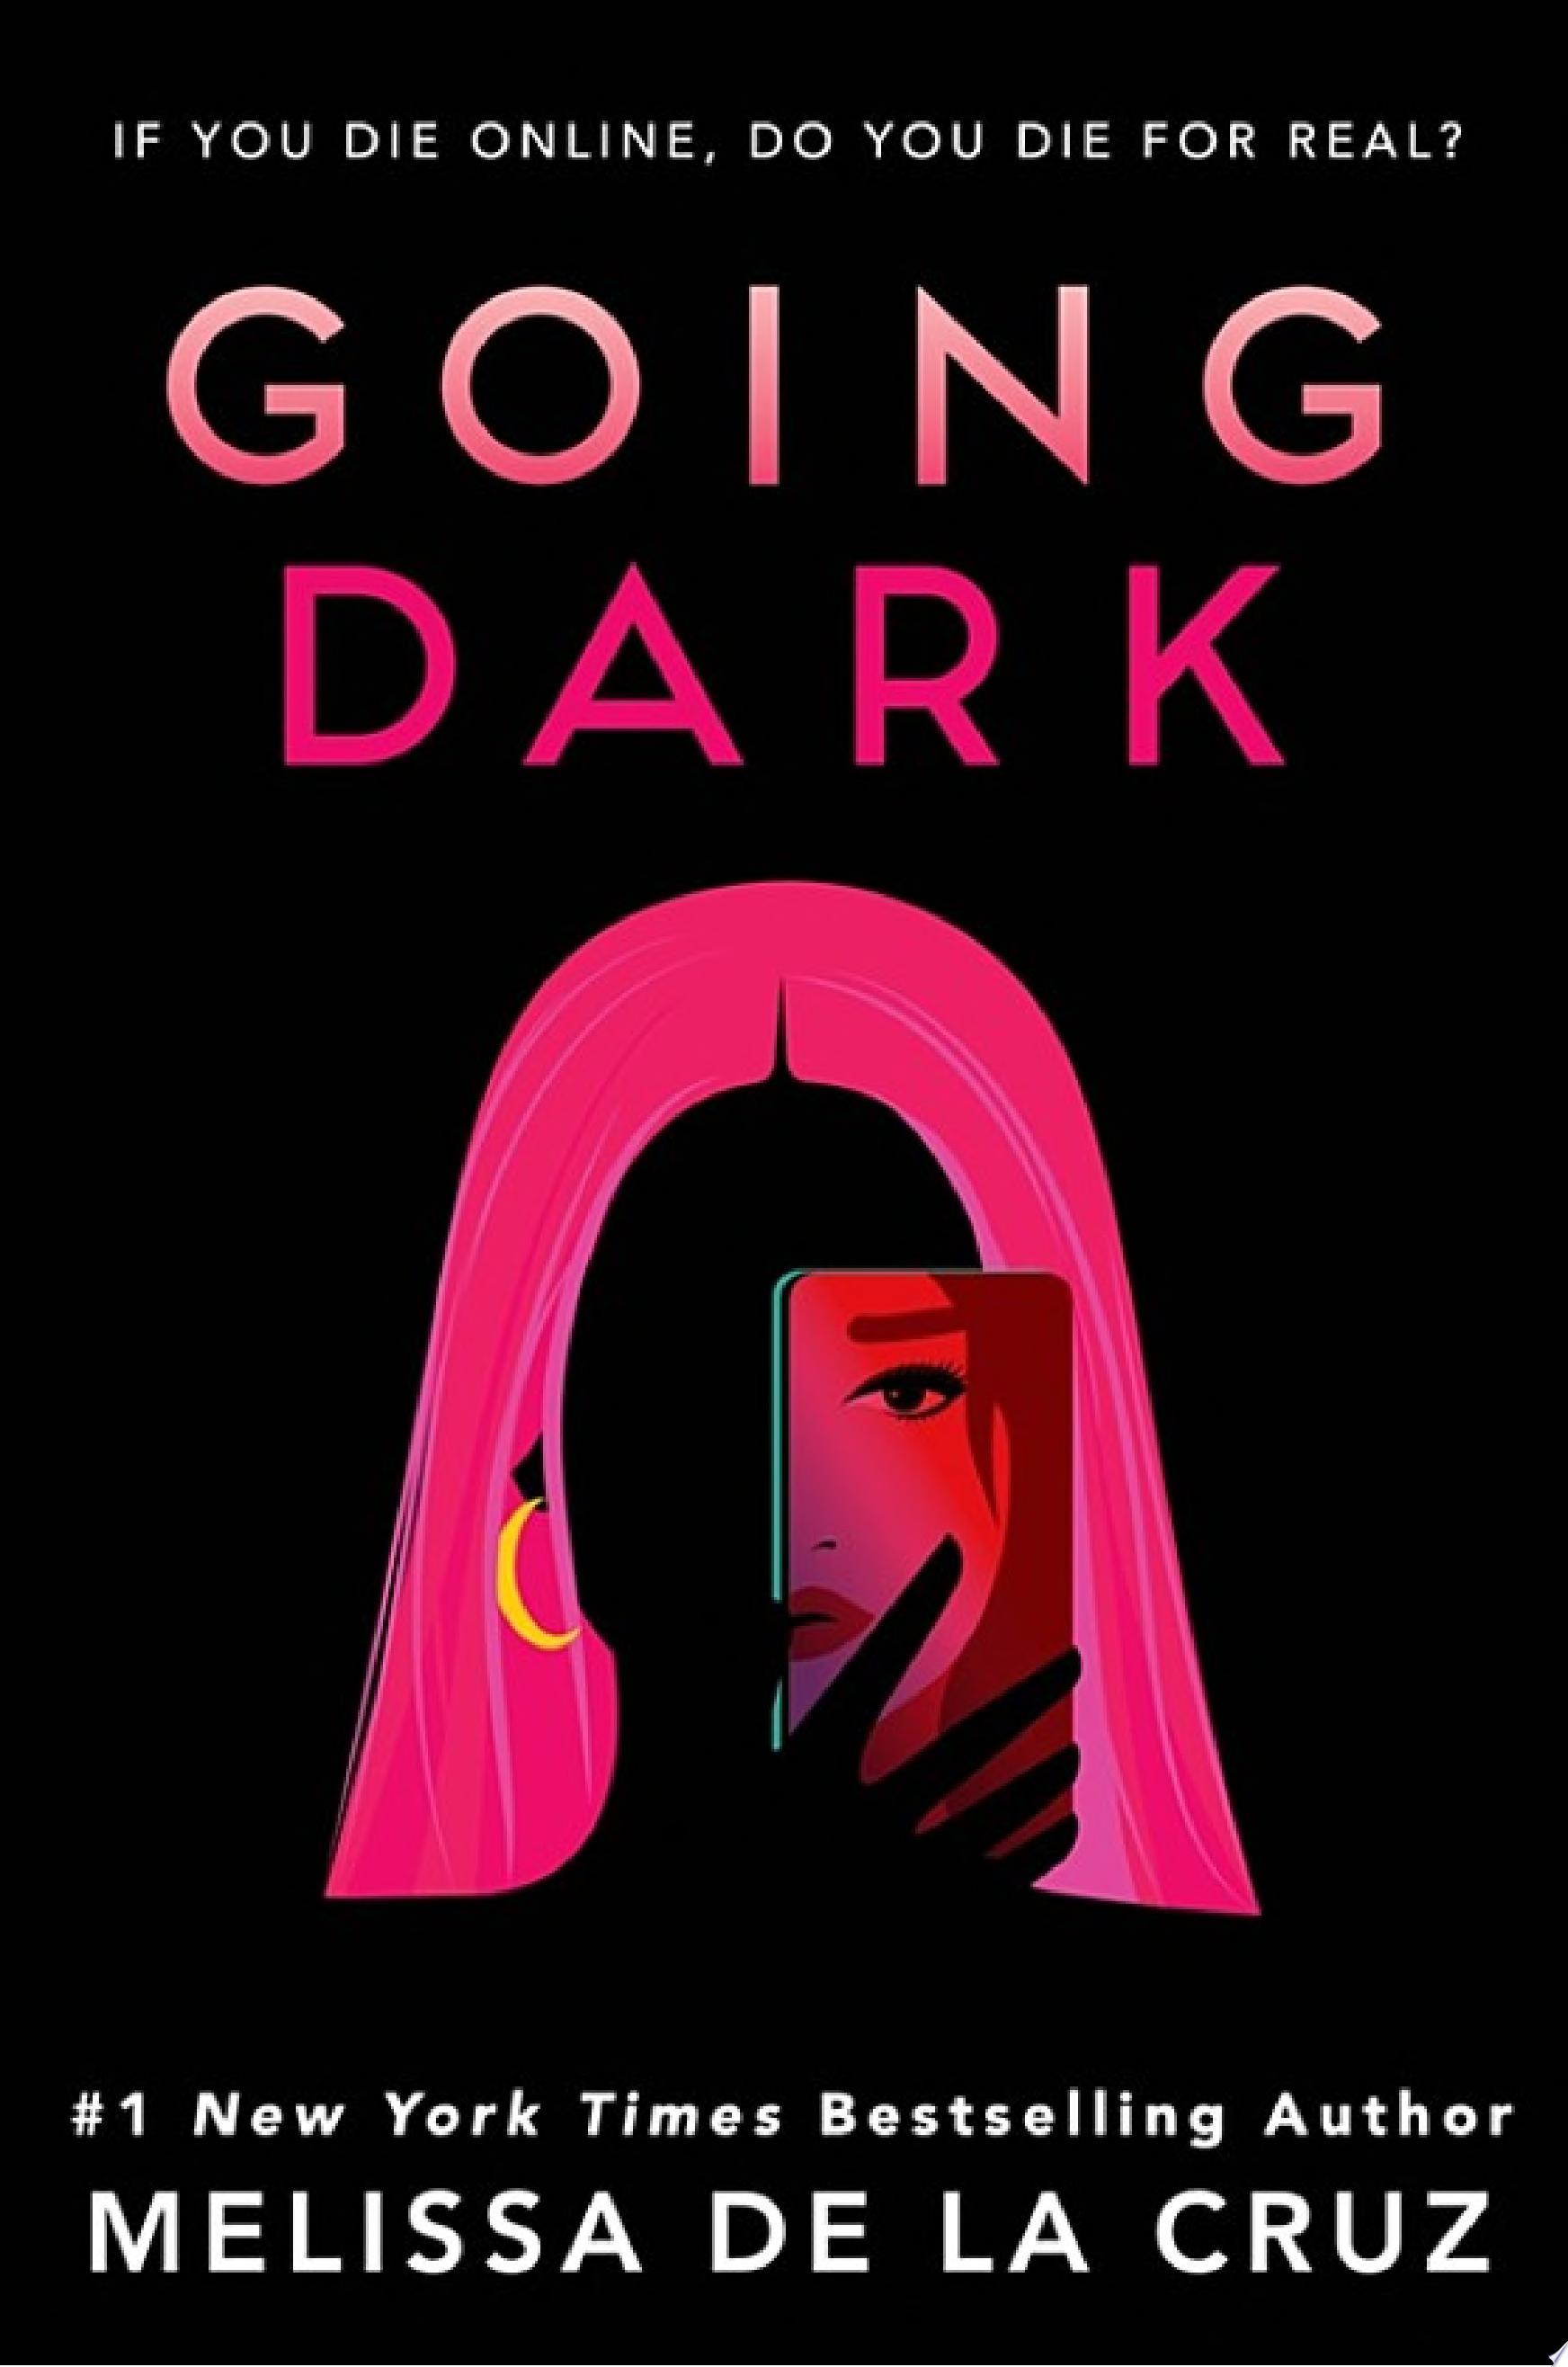 Image for "Going Dark"